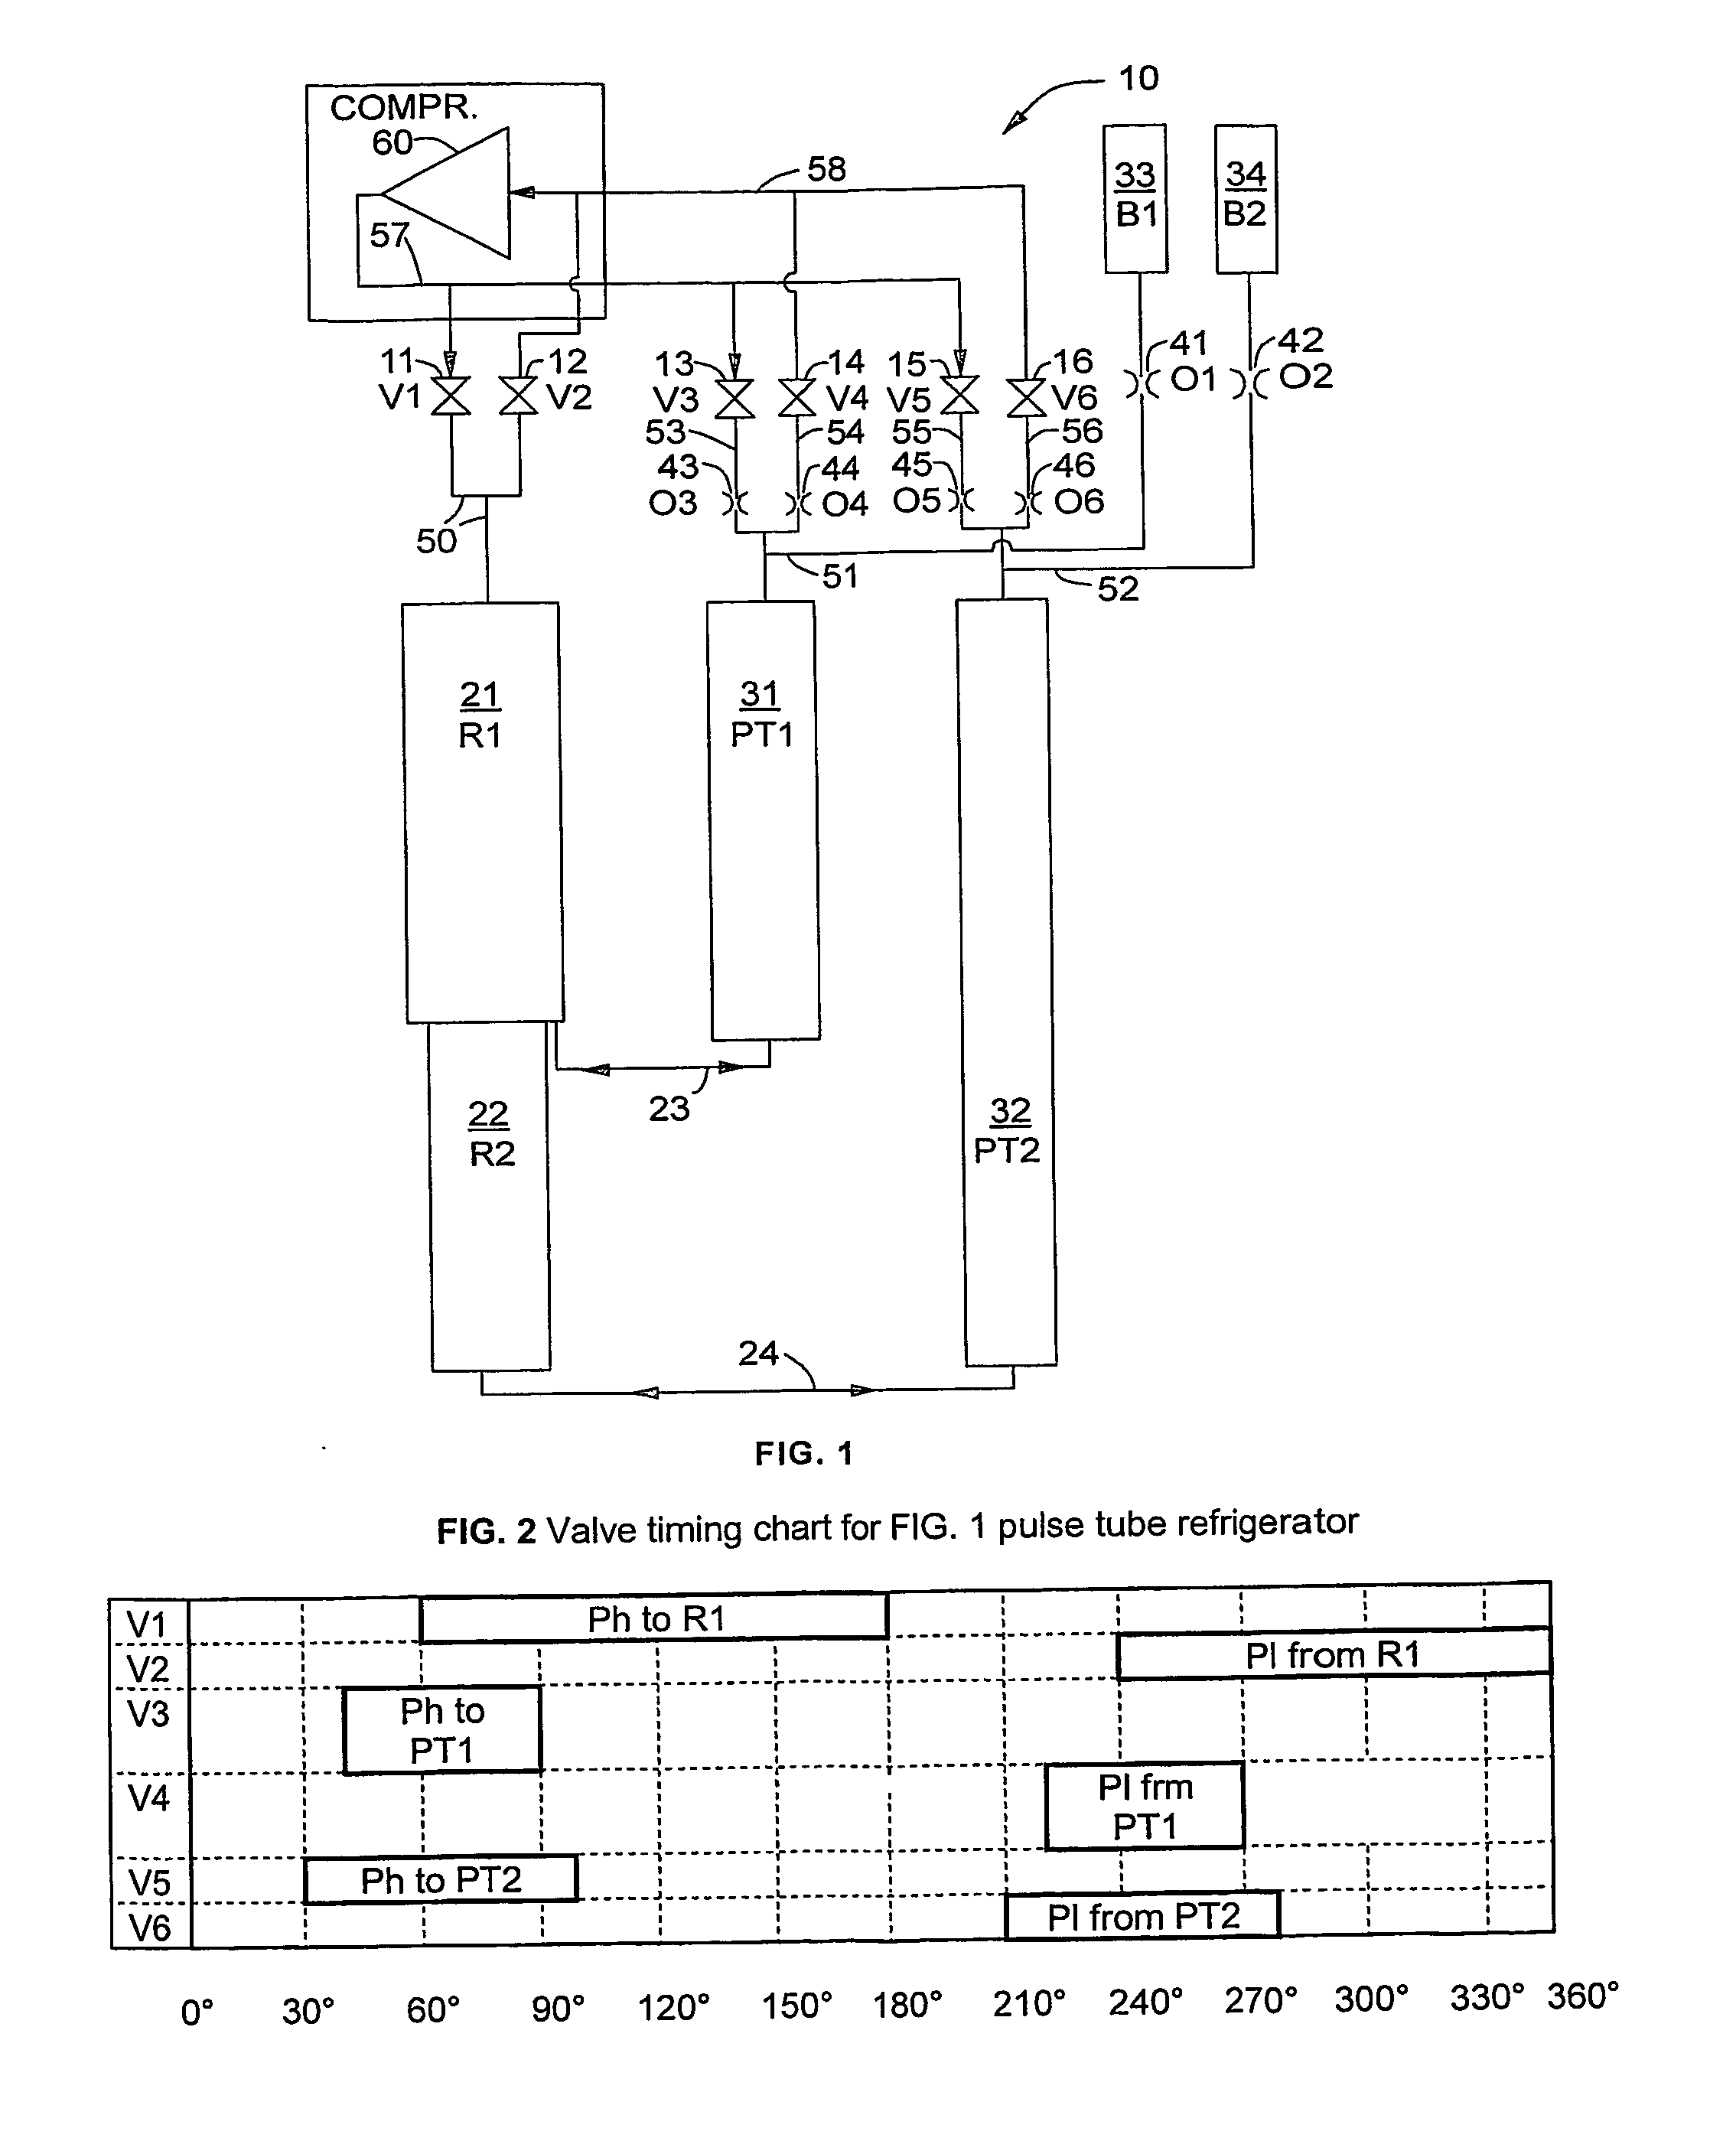 Three track valve for cryogenic refrigerator